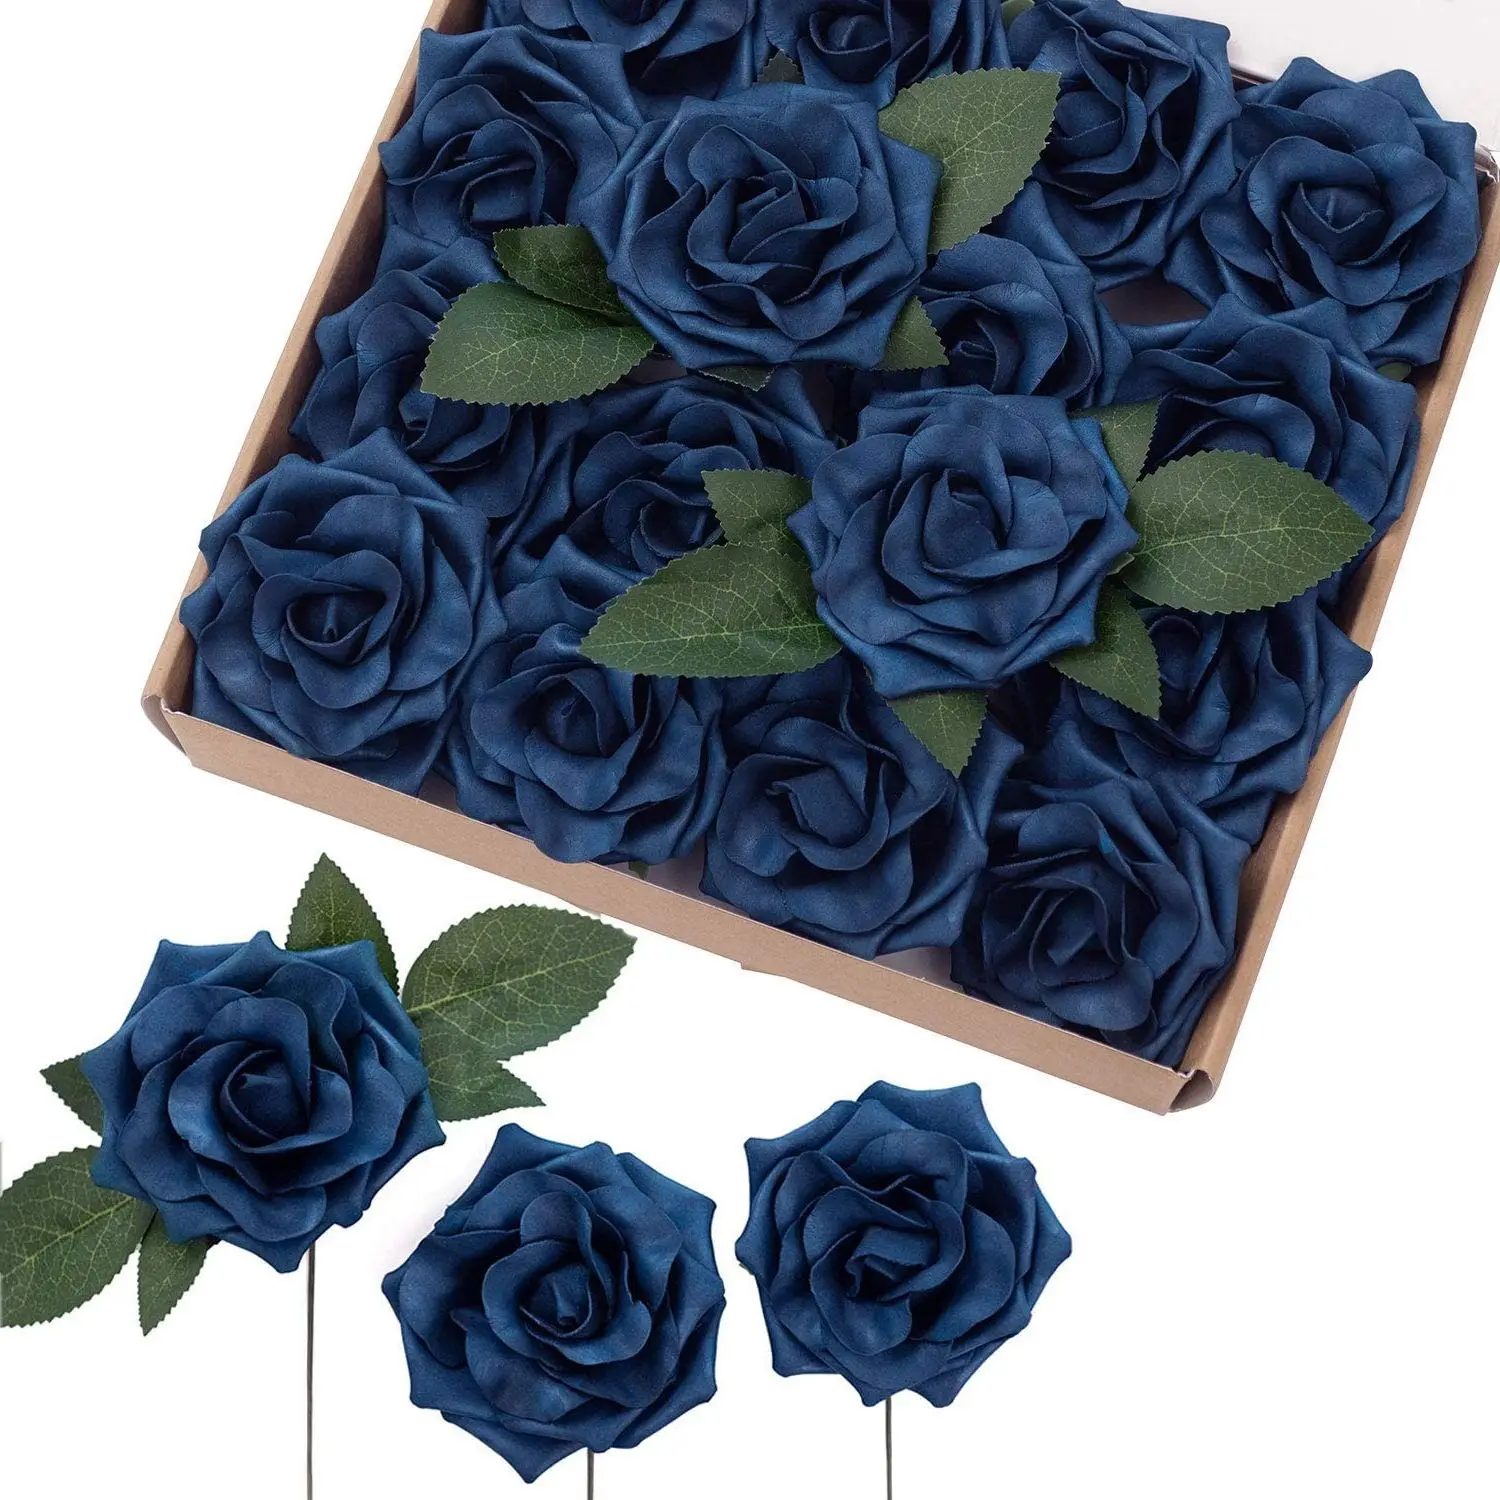 

Mefier Artificial Flowers Navy Blue Avalanche Rose 16/32pcs Fake Roses w/Stem for DIY Wedding Bouquets Centerpieces Decoration